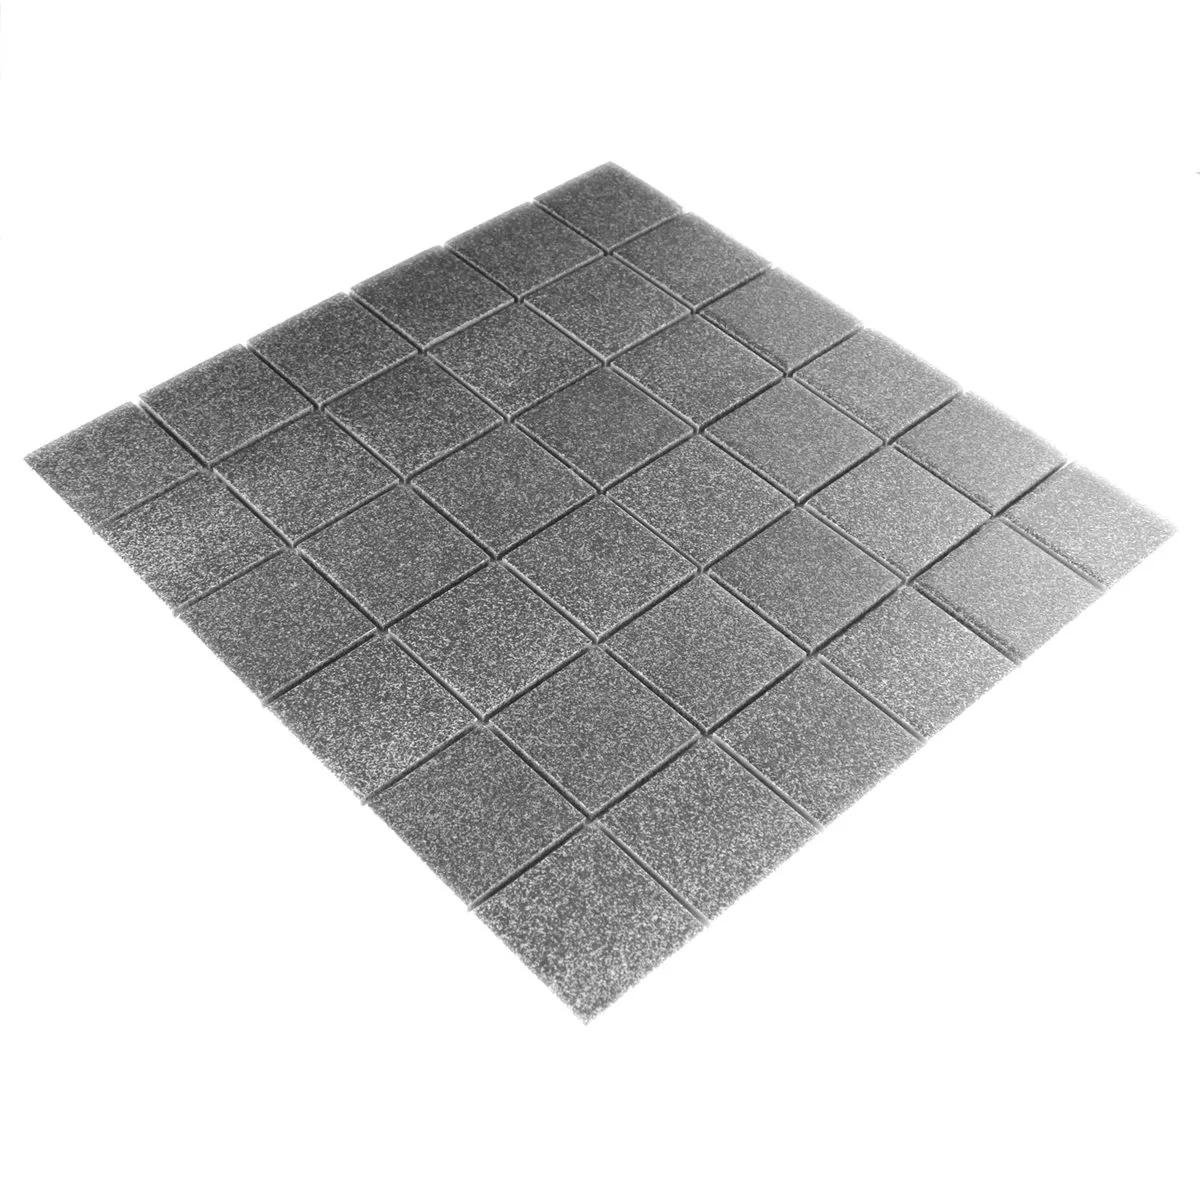 Sample Mosaic Tiles Ceramic Stonegrey Non-Slip Q48